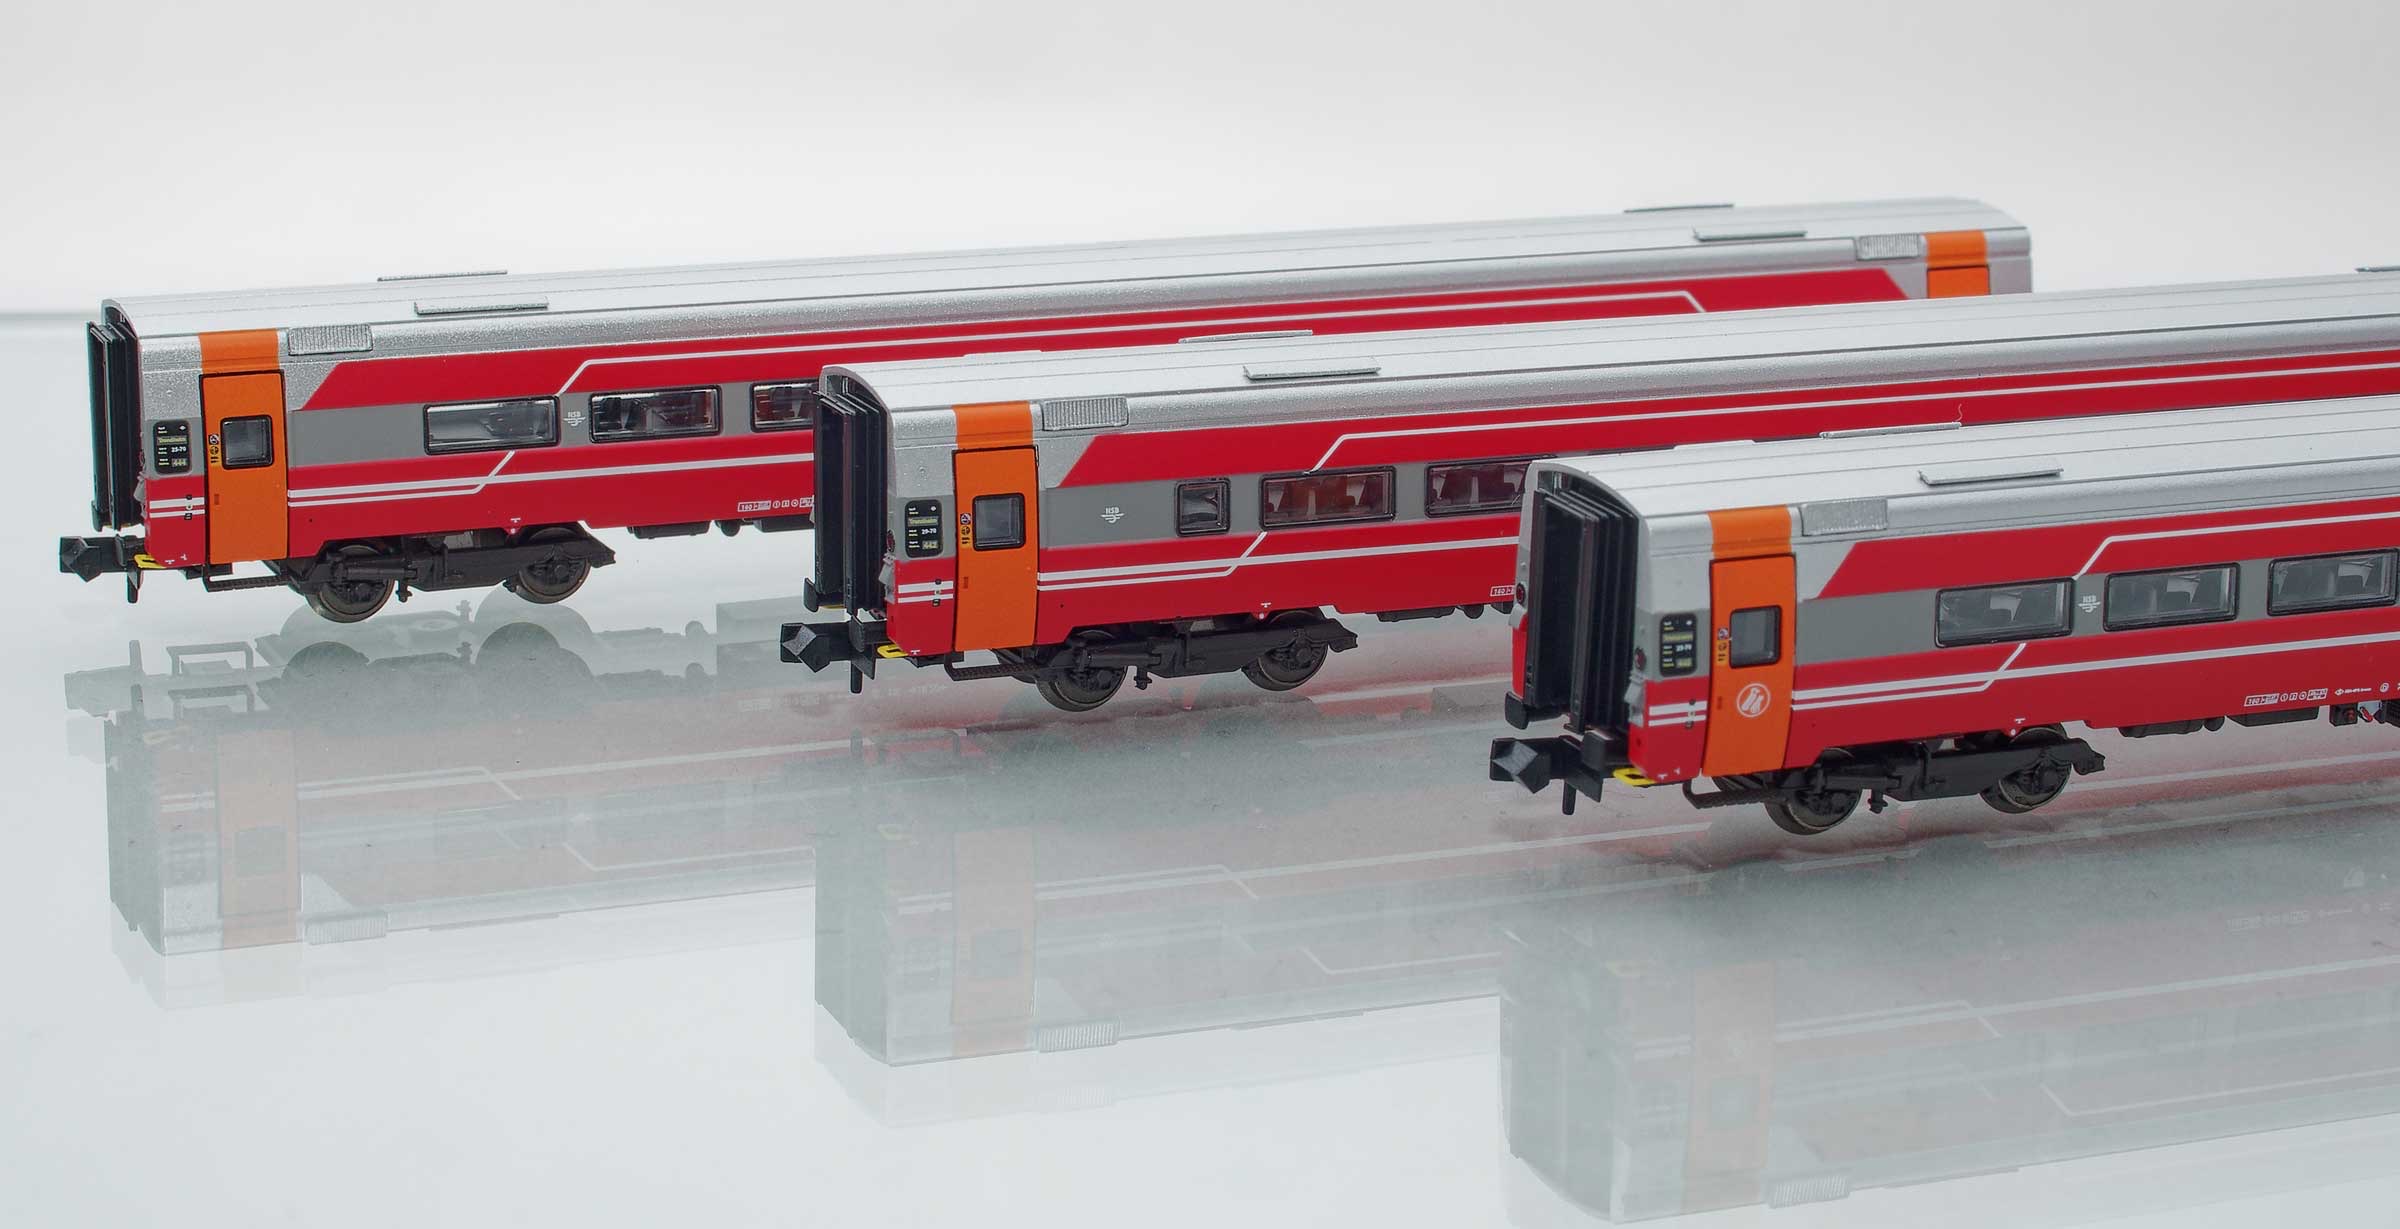 Set 18001: NSB express train cars B7-4, B7-5 and B7-6